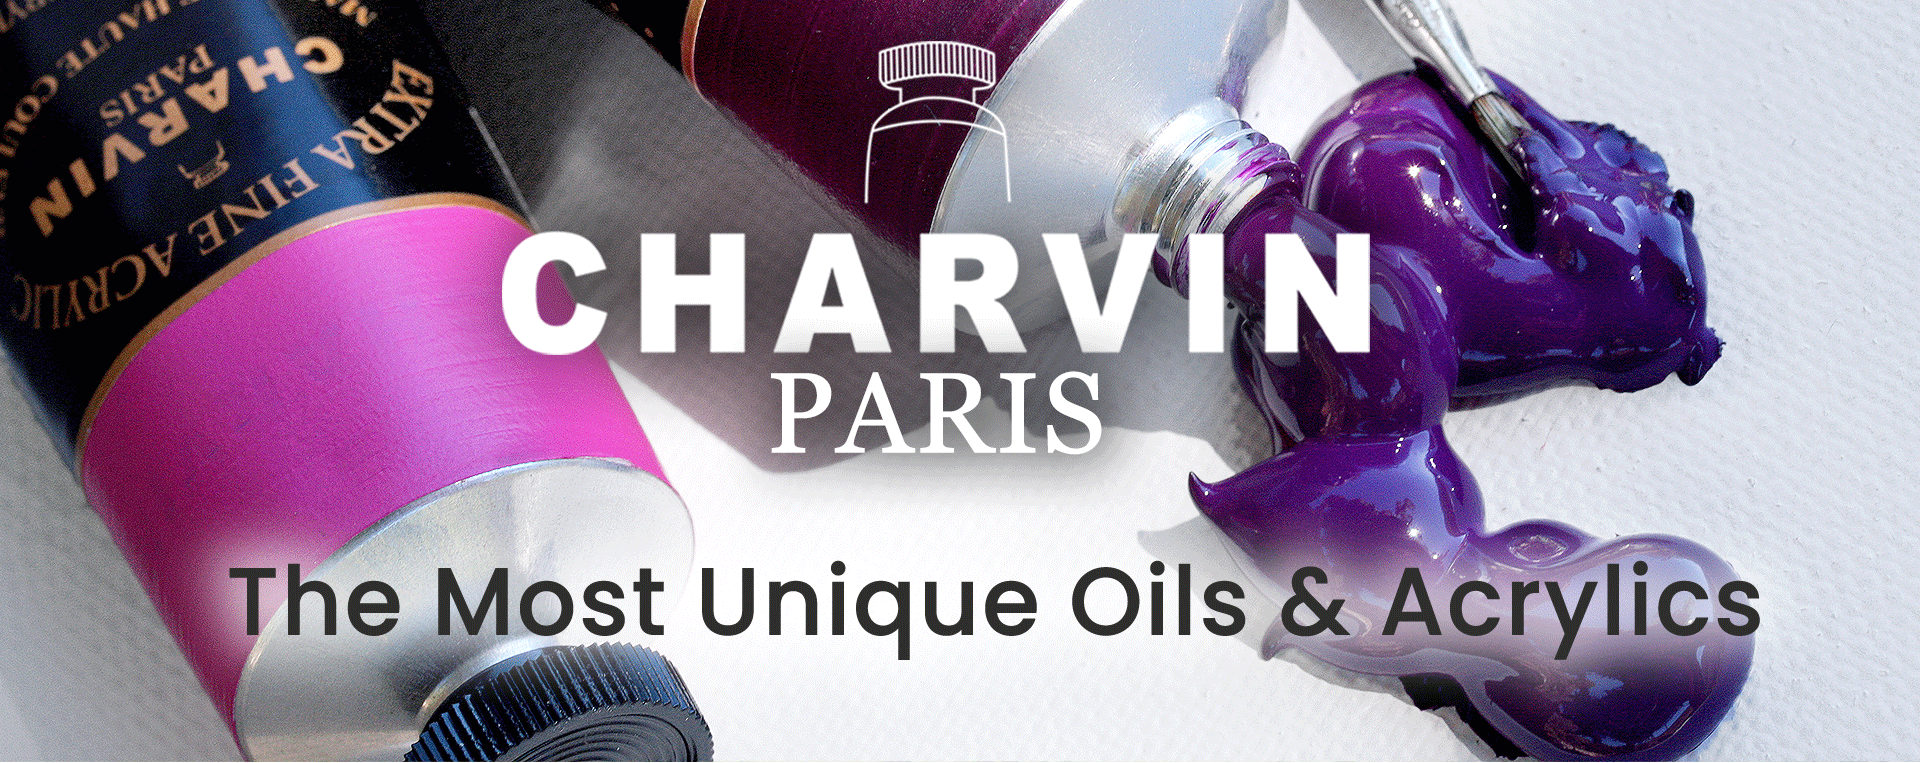 Charvin oils & acrylics